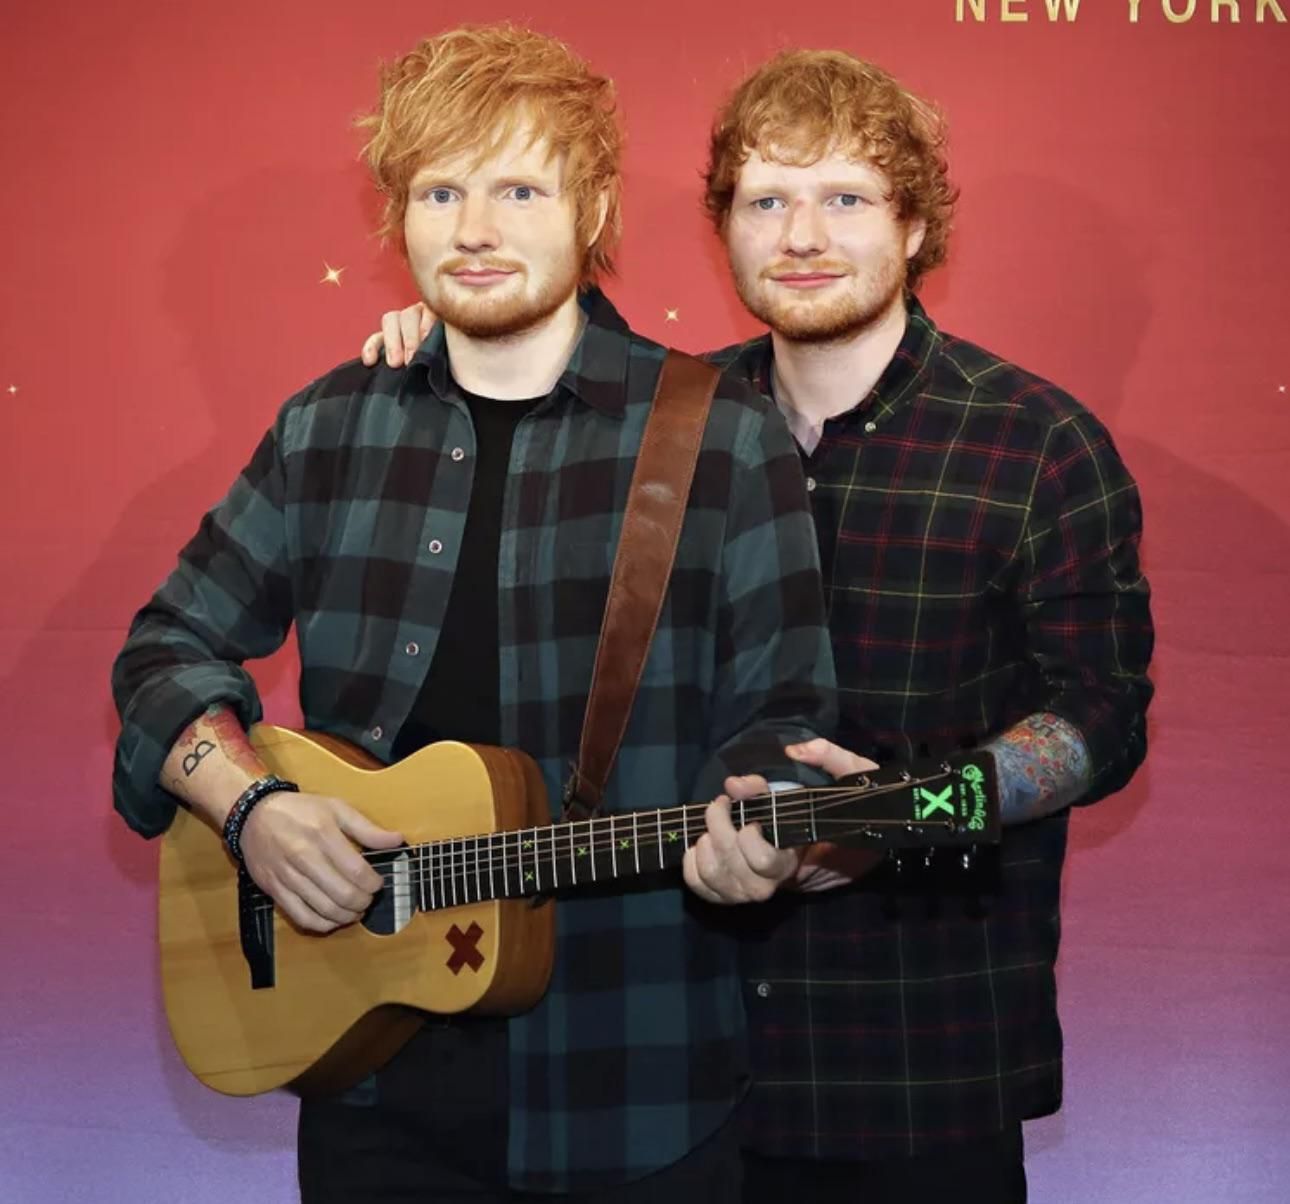 Ed Sheeran with his wax figure